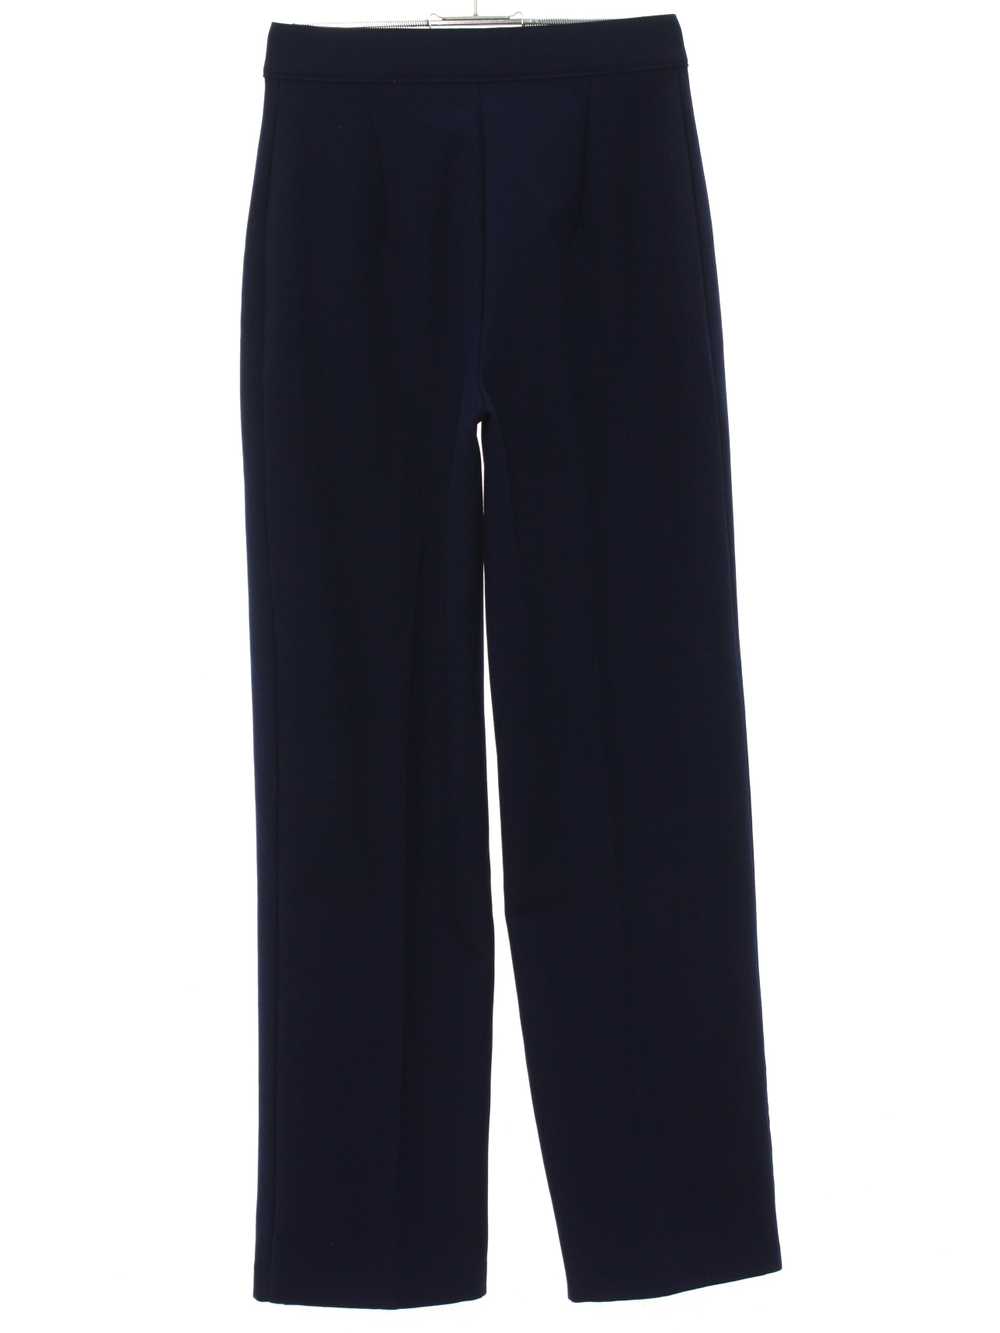 1980's Womens Dark Blue Knit Pants - image 3